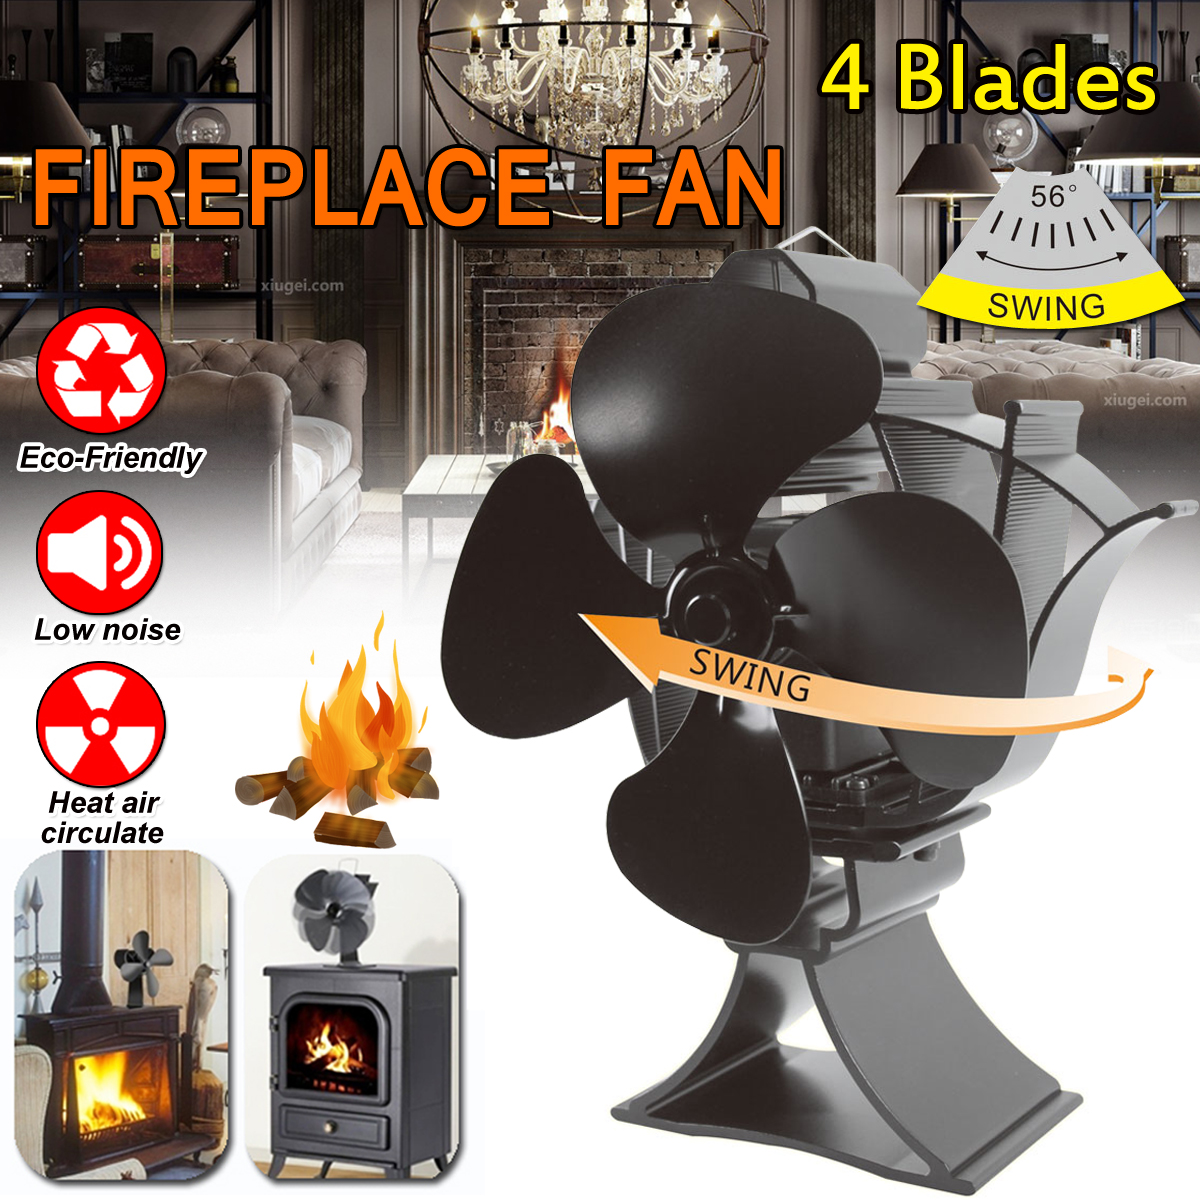 4-Blades-Heat-Powered-Wood-Stove-Fan-Wood-Log-Burner-Fireplace-Eco-friendly-Fan-No-Electricity-1642392-1